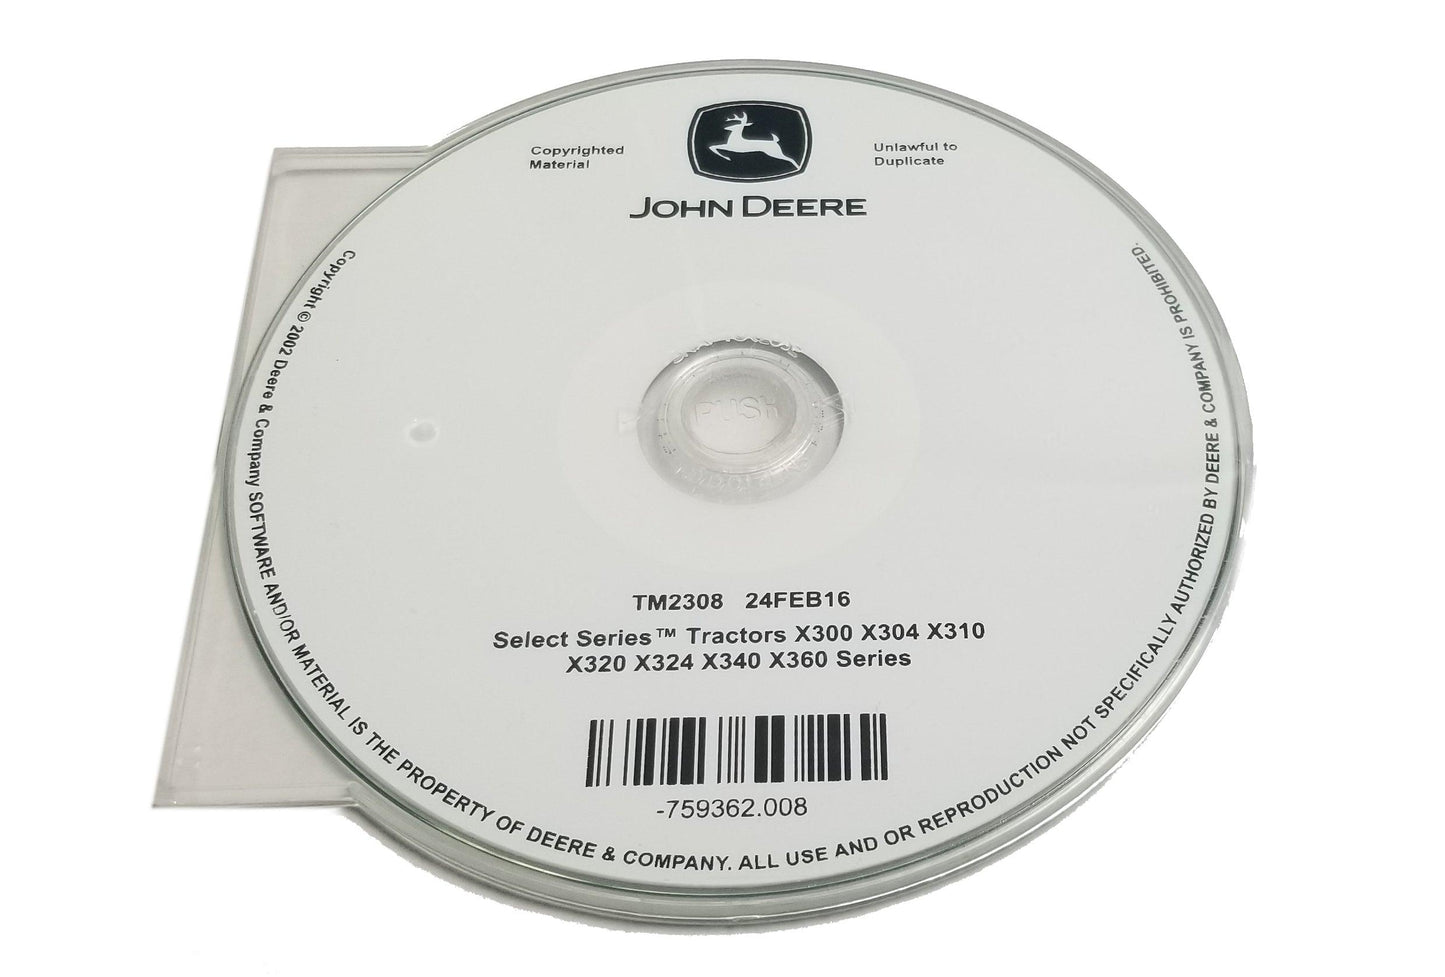 John Deere X300/X304/X310/X320/X324/X340/X360 Select Series Tractors Technical CD Manual - TM2308CD